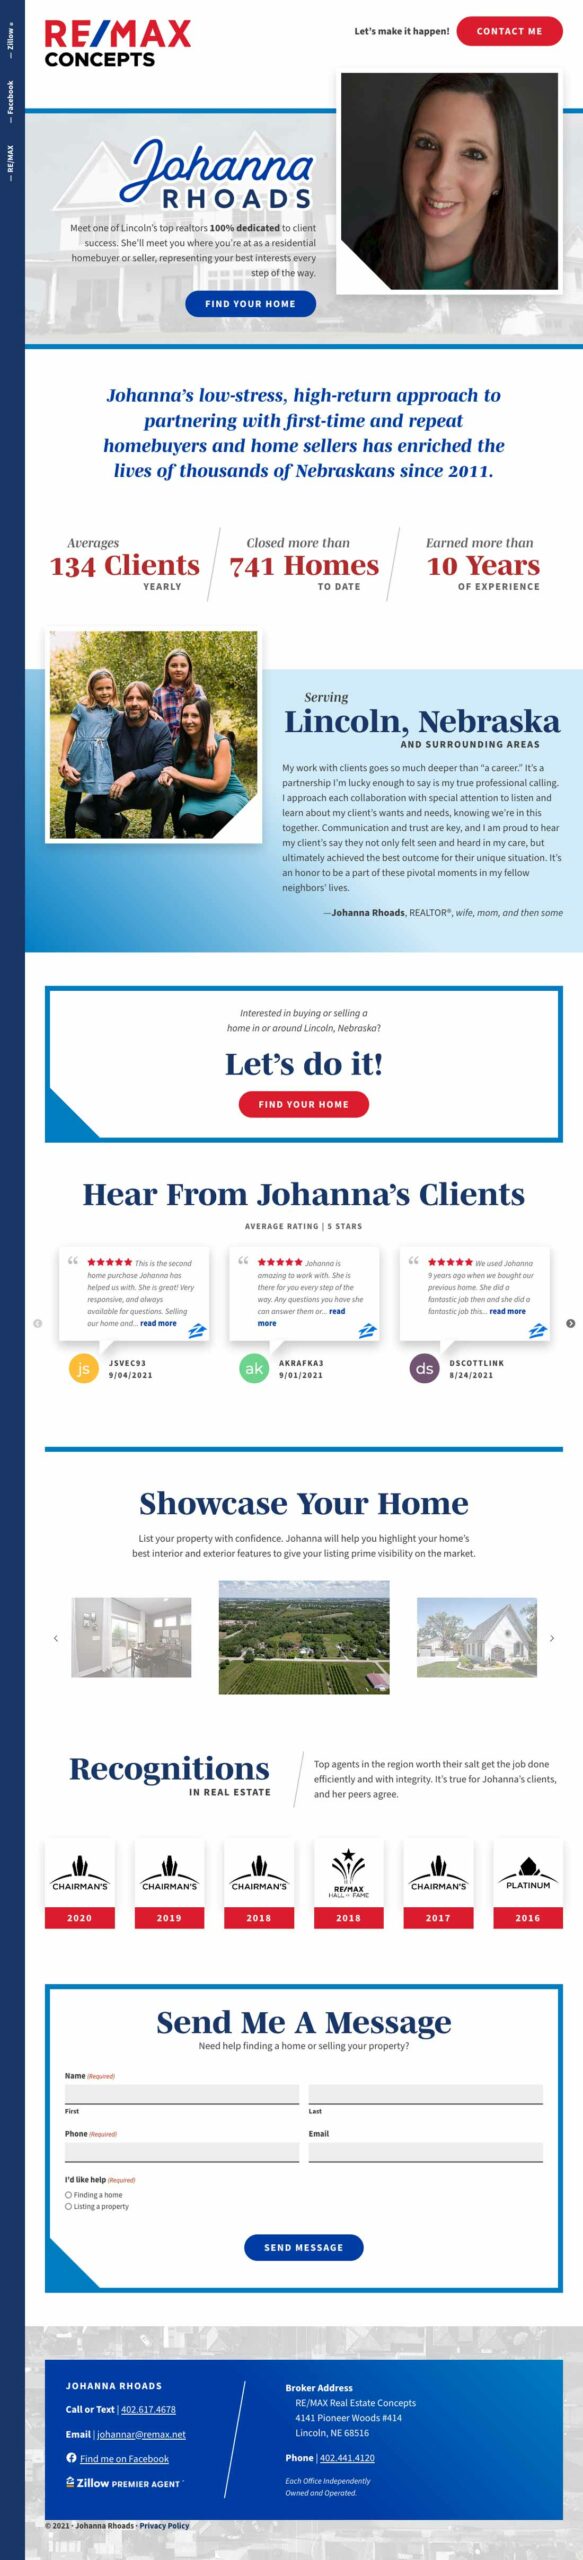 Johanna Rhoads, Realtor homepage showcasing Johanna's accomplishments utilizing REMAX branding